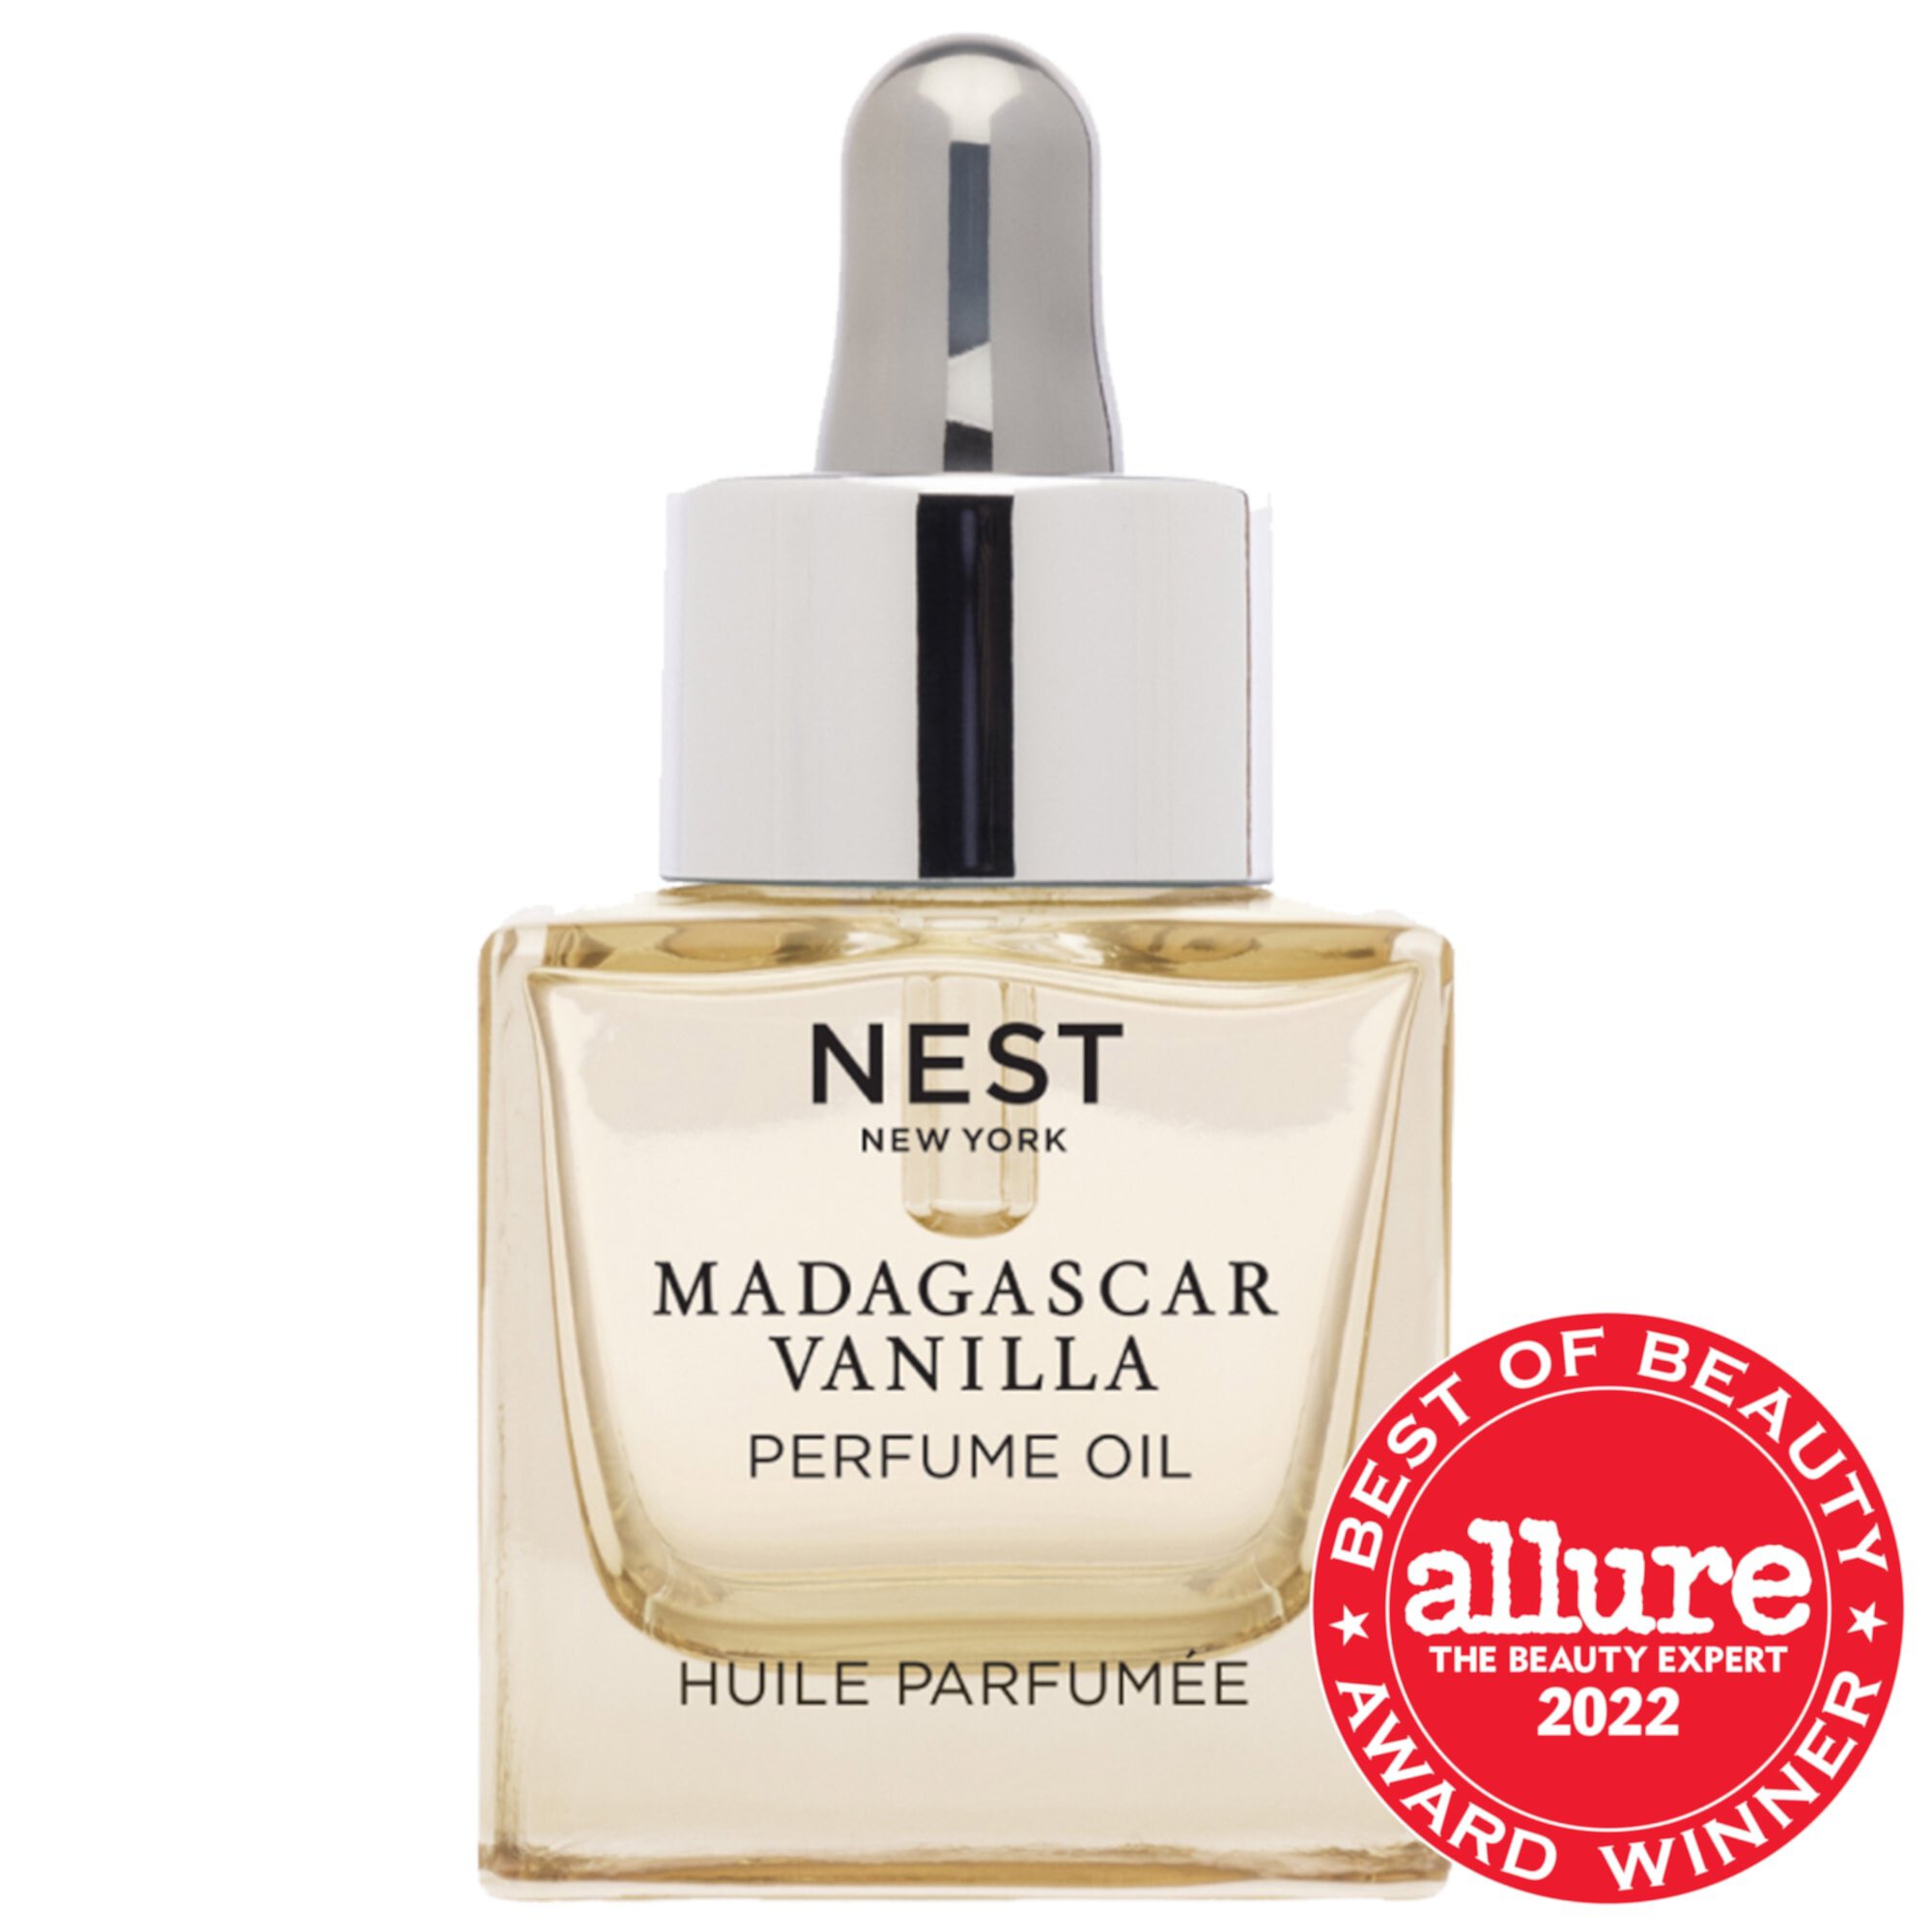 Madagascar Vanilla Perfume Oil Nest New York